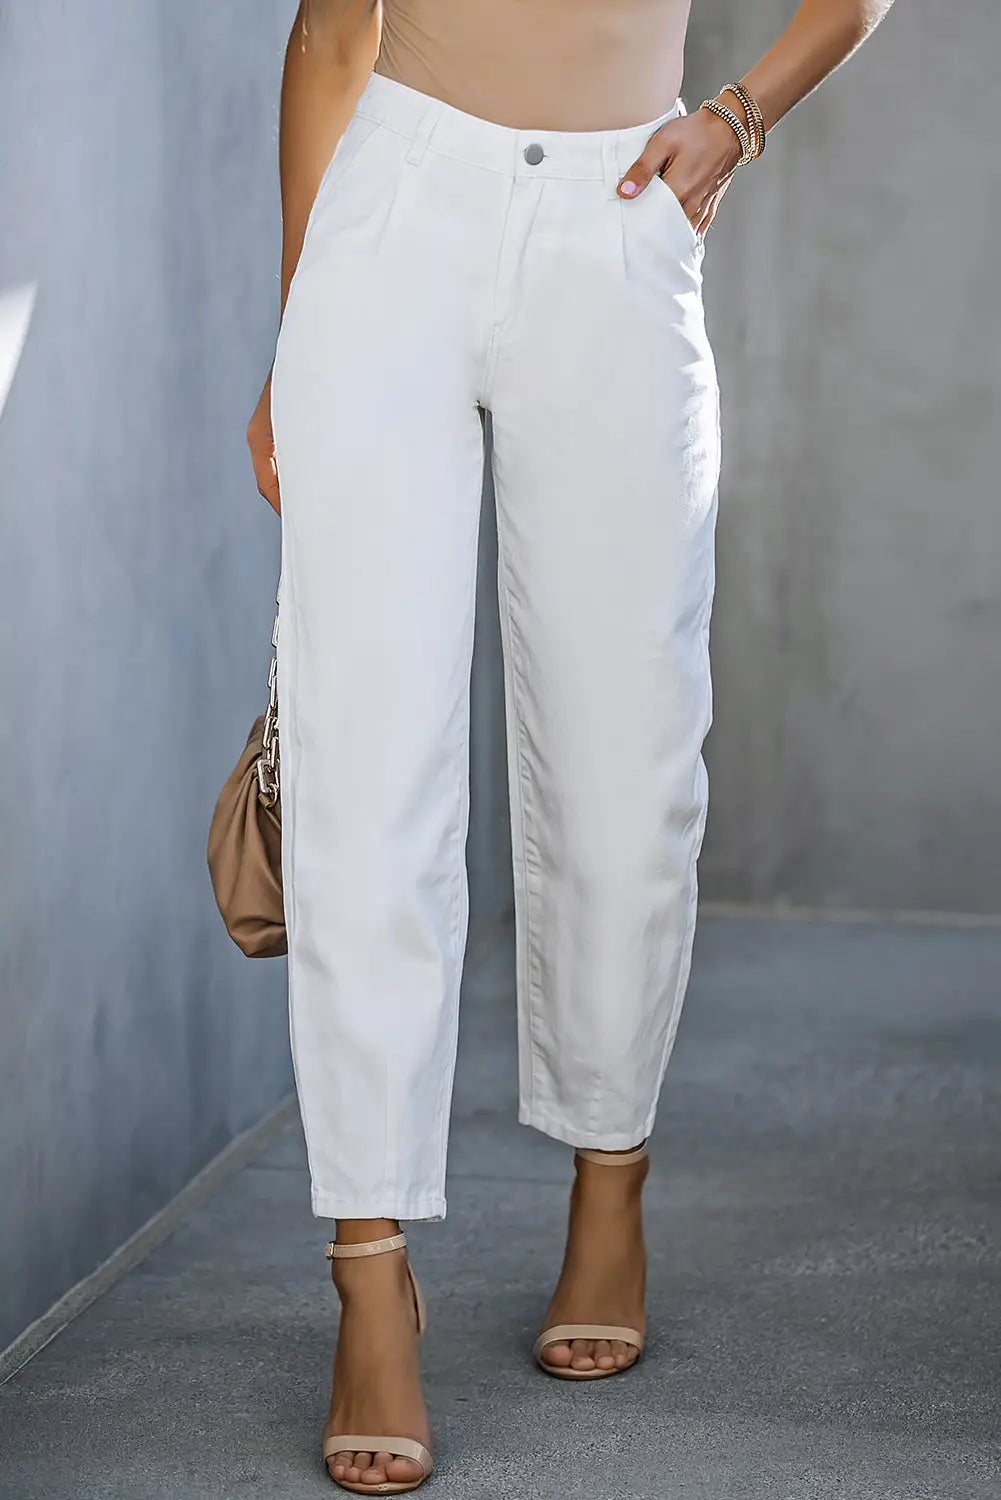 Khaki solid high waist casual pants - white / 6 / 98% cotton + 2% elastane - cargo